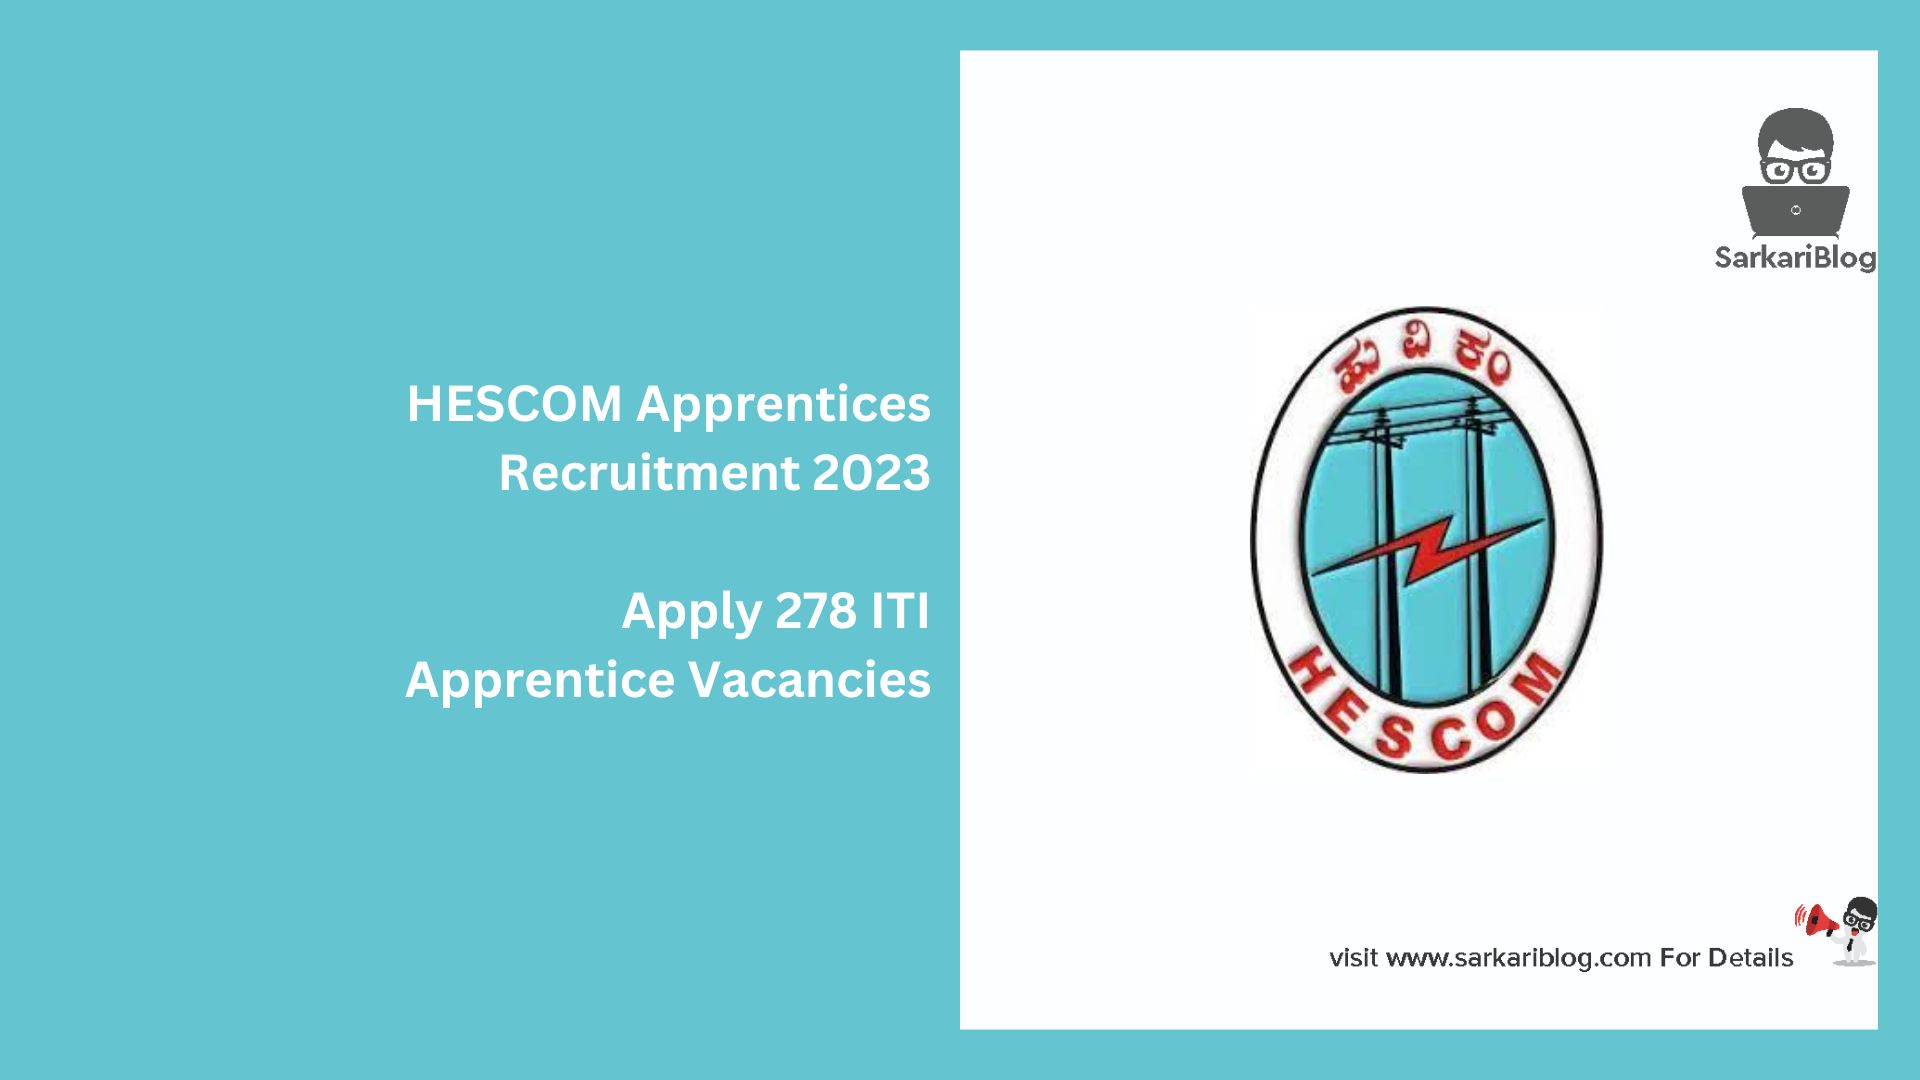 HESCOM Apprentices Recruitment 2023